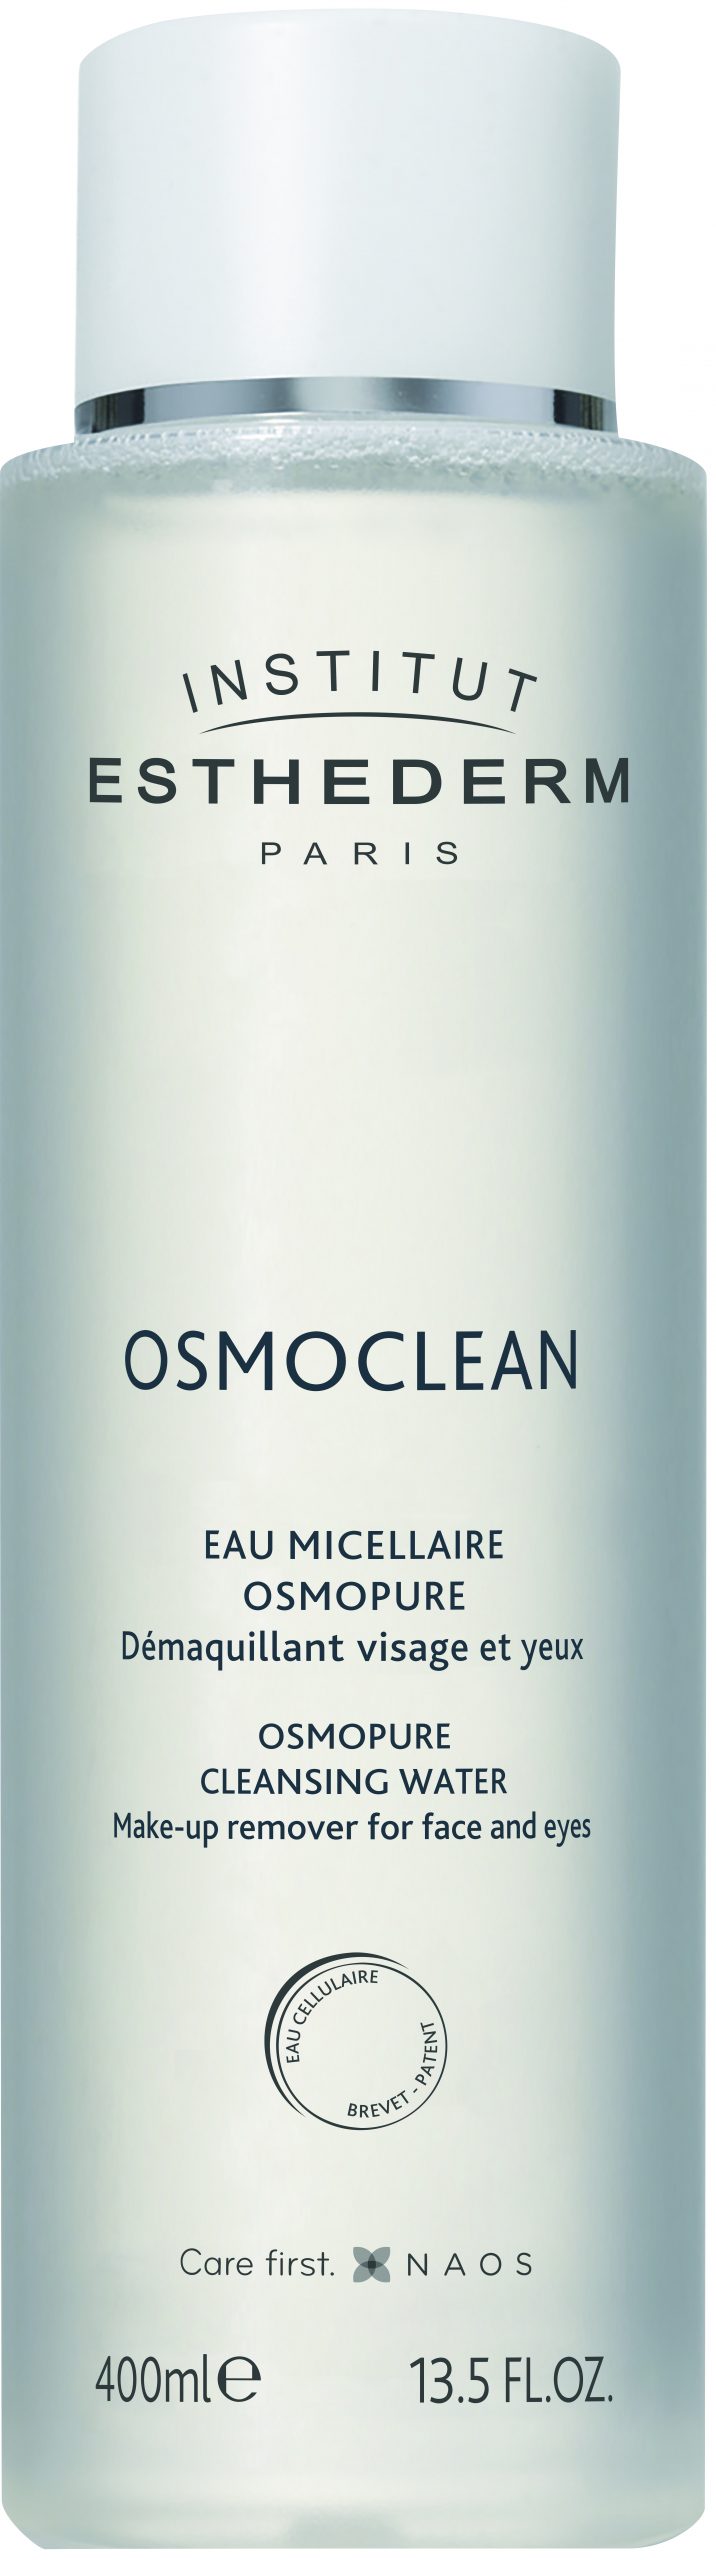 Osmopure Cleansing Water (Micellar Water